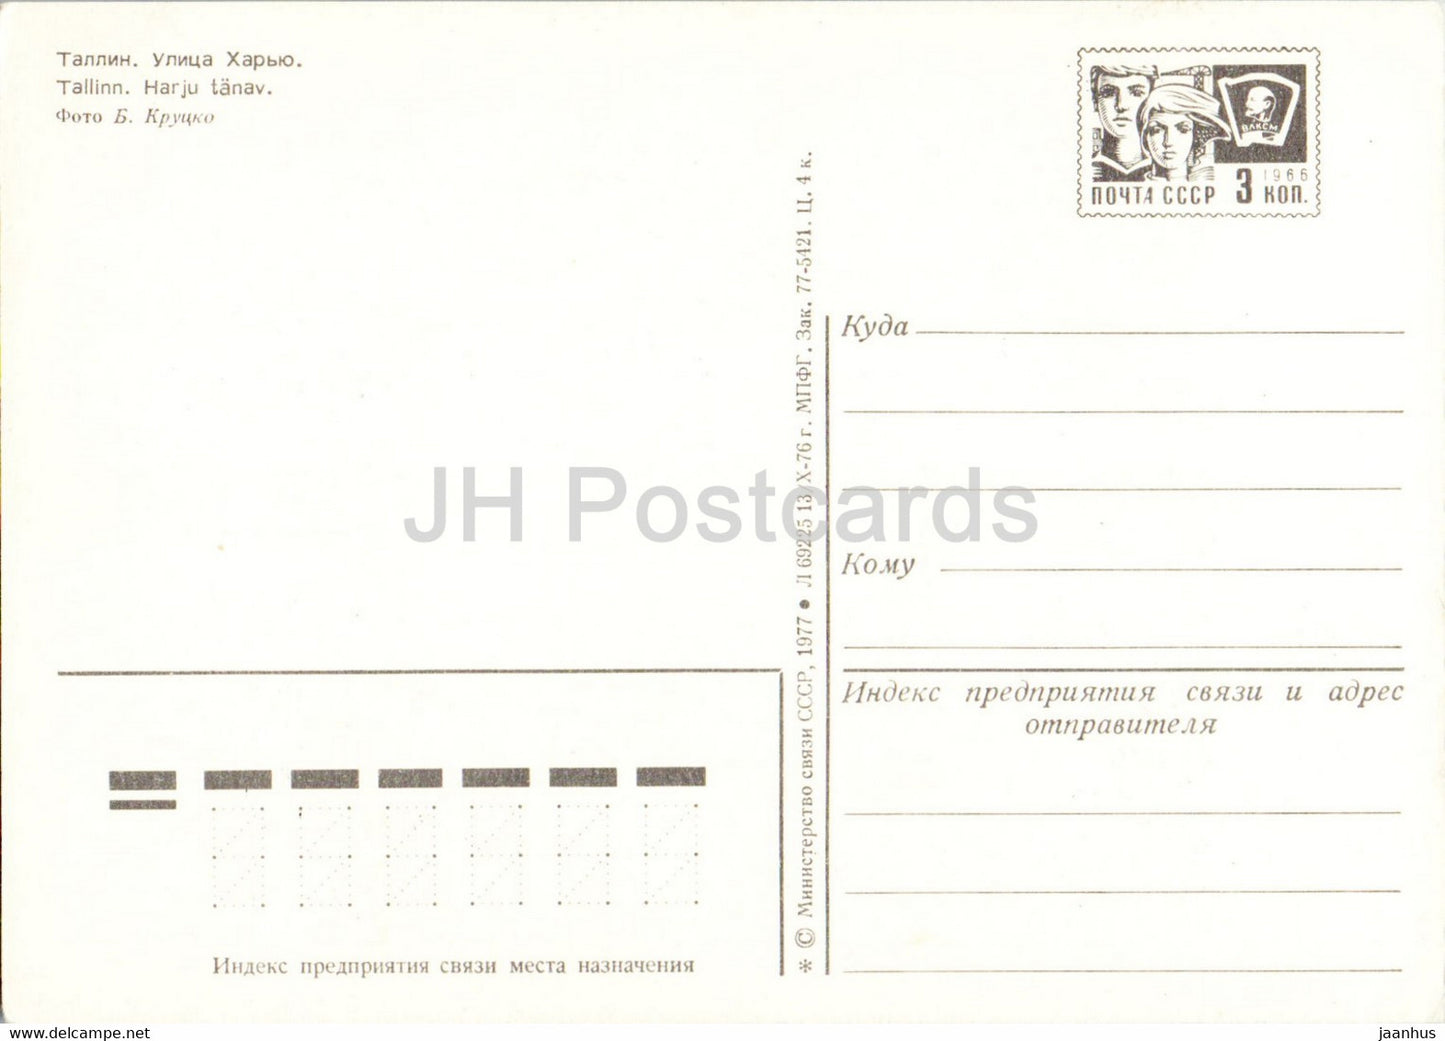 Tallinn - Rue Harju - Vieille ville - entier postal - 1977 - Estonie URSS - inutilisé